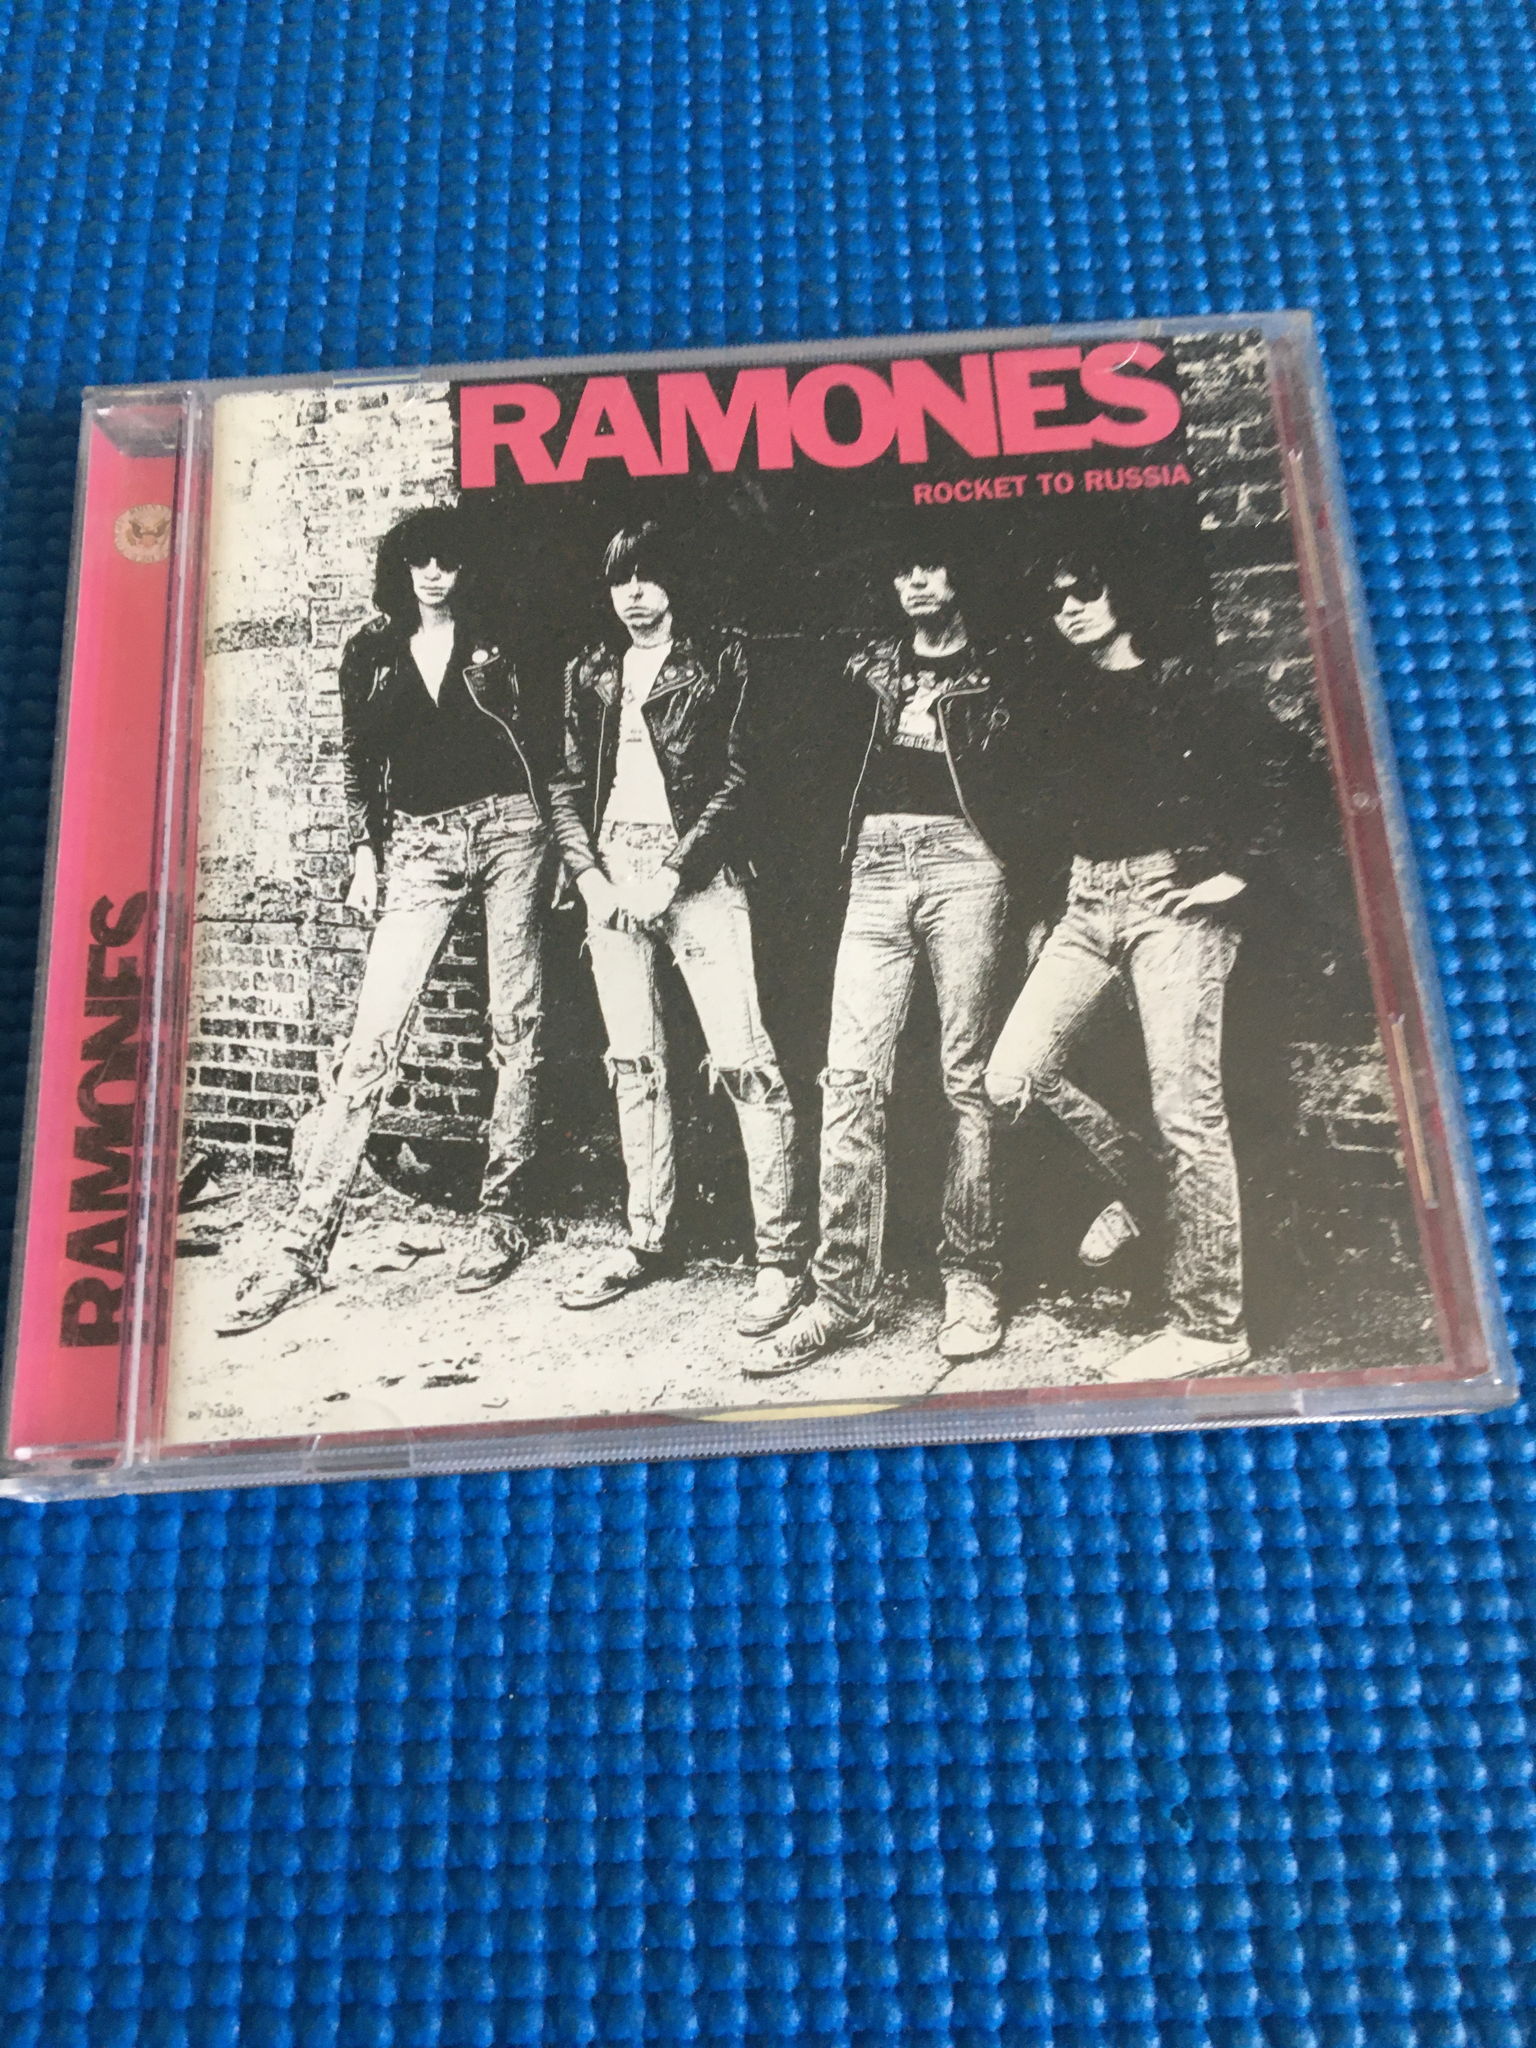 The Ramones cd Rocket to Russia